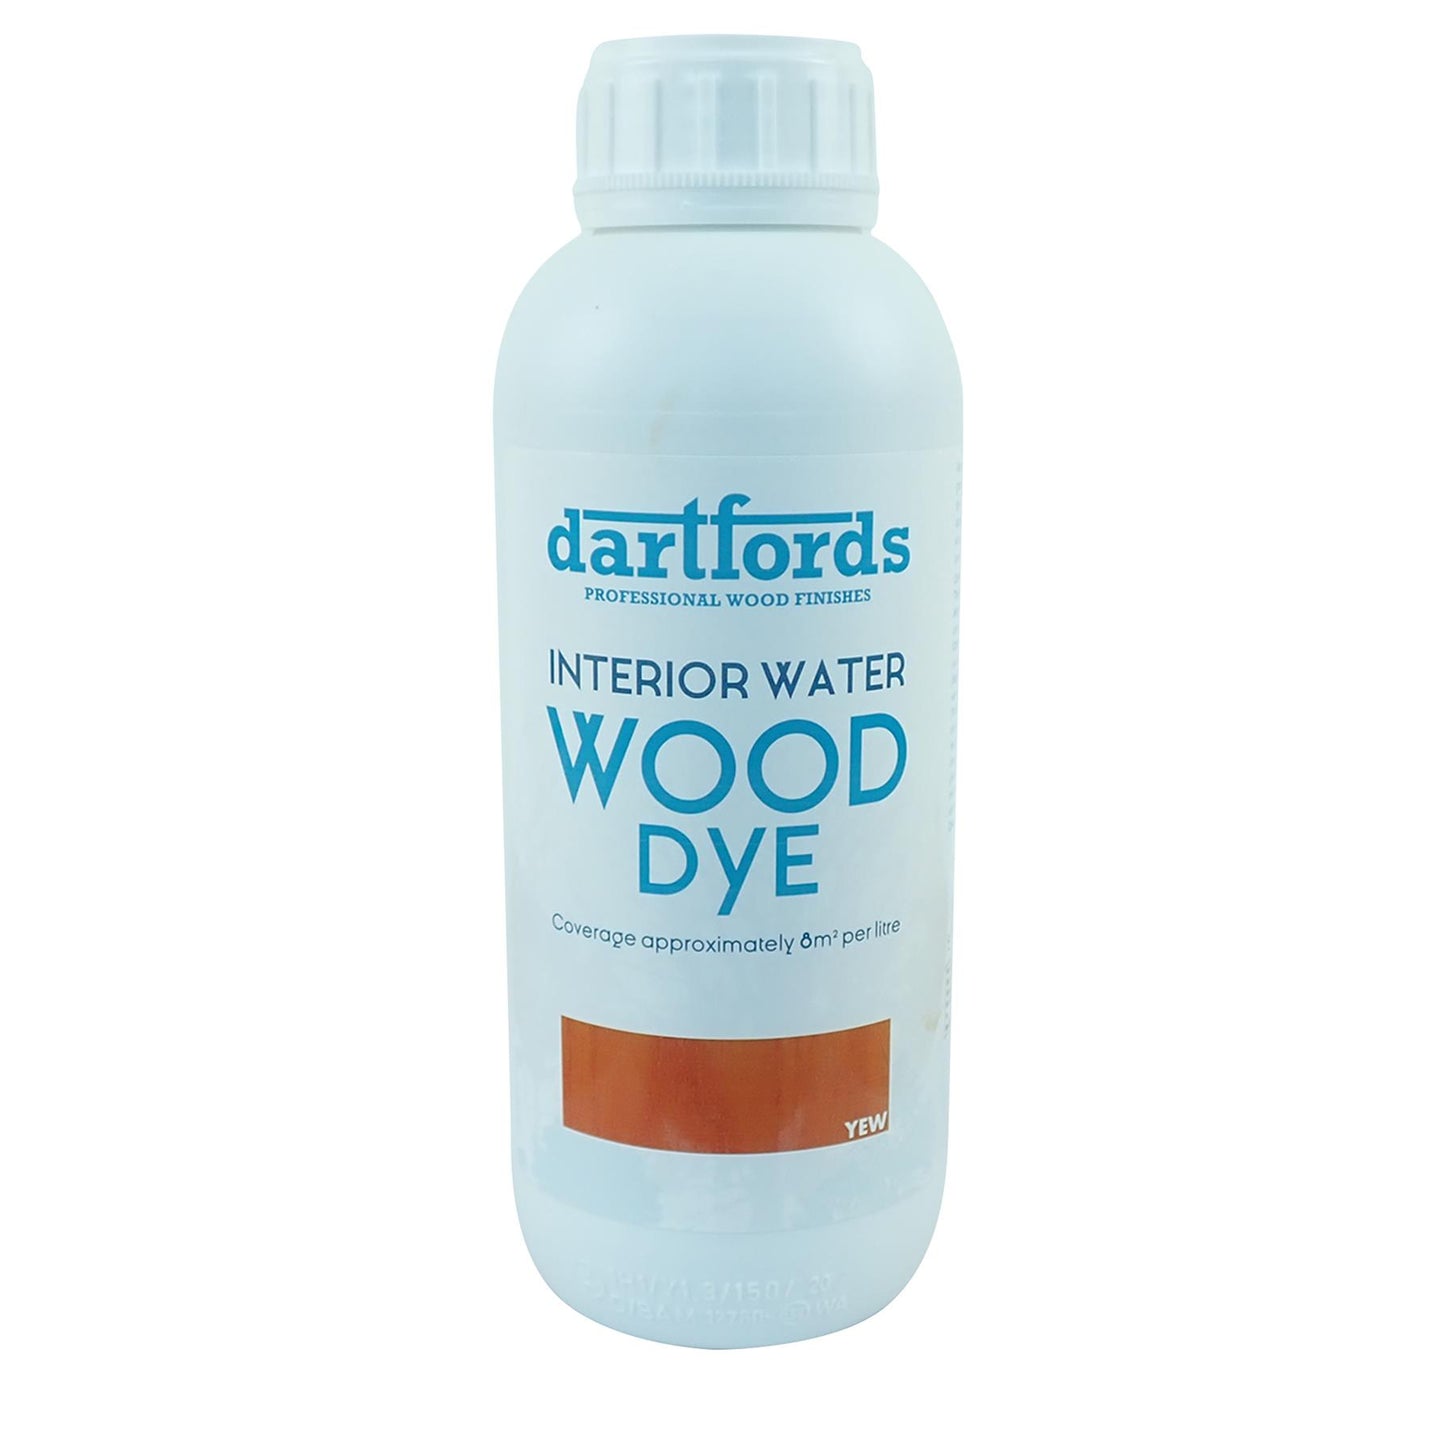 dartfords Yew Interior Water Based Wood Dye - 1 litre Tin